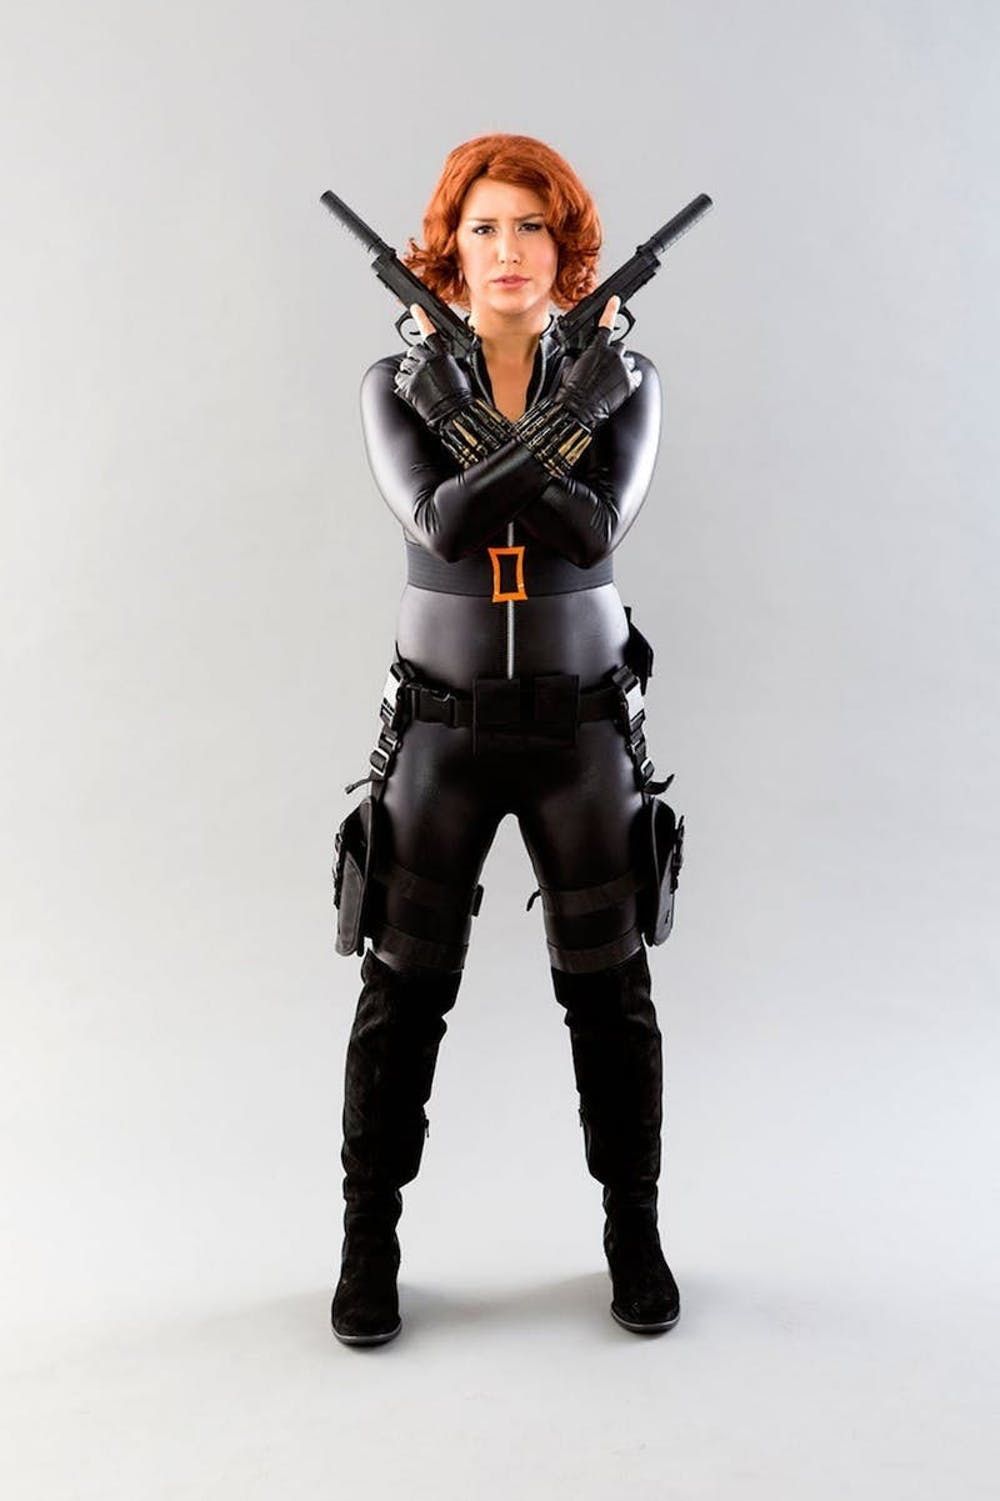 black widow superhero costume ideas